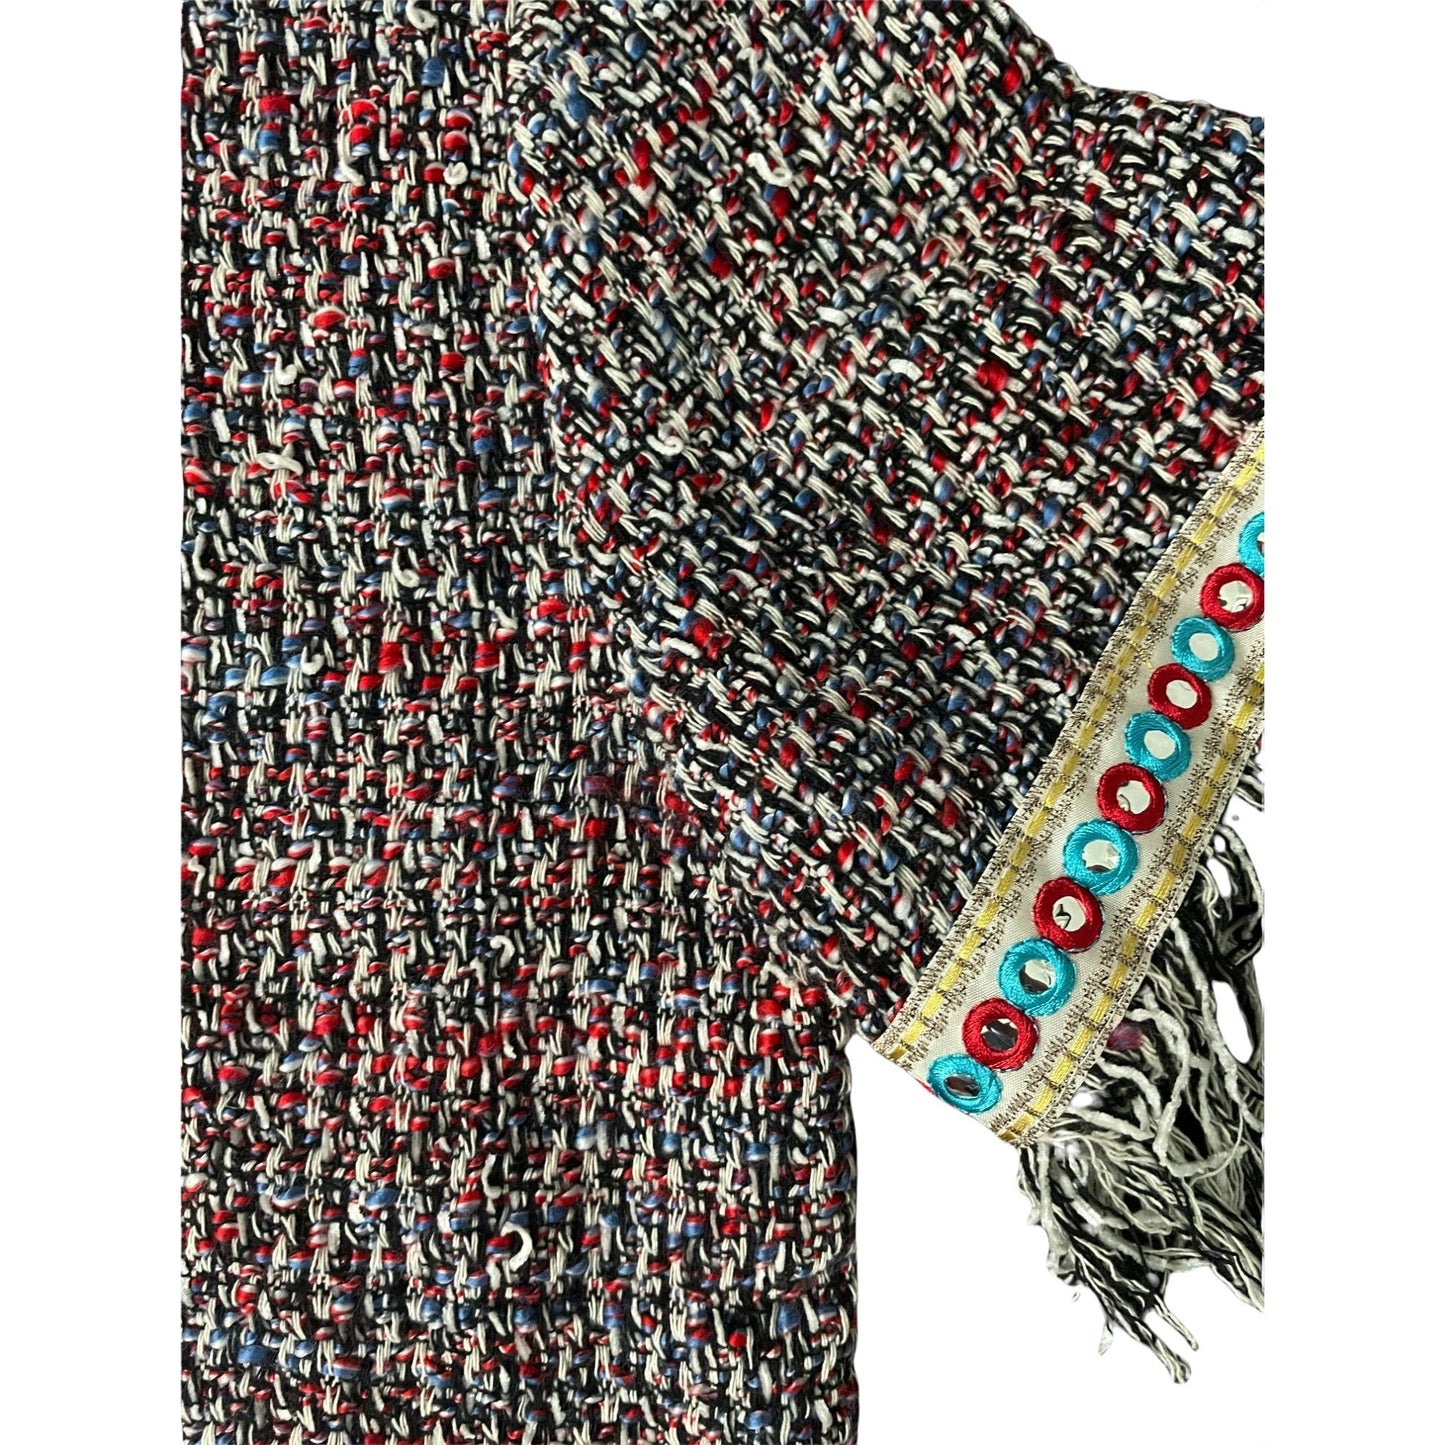 Zara Tweed Peplum Hem Top - S/M